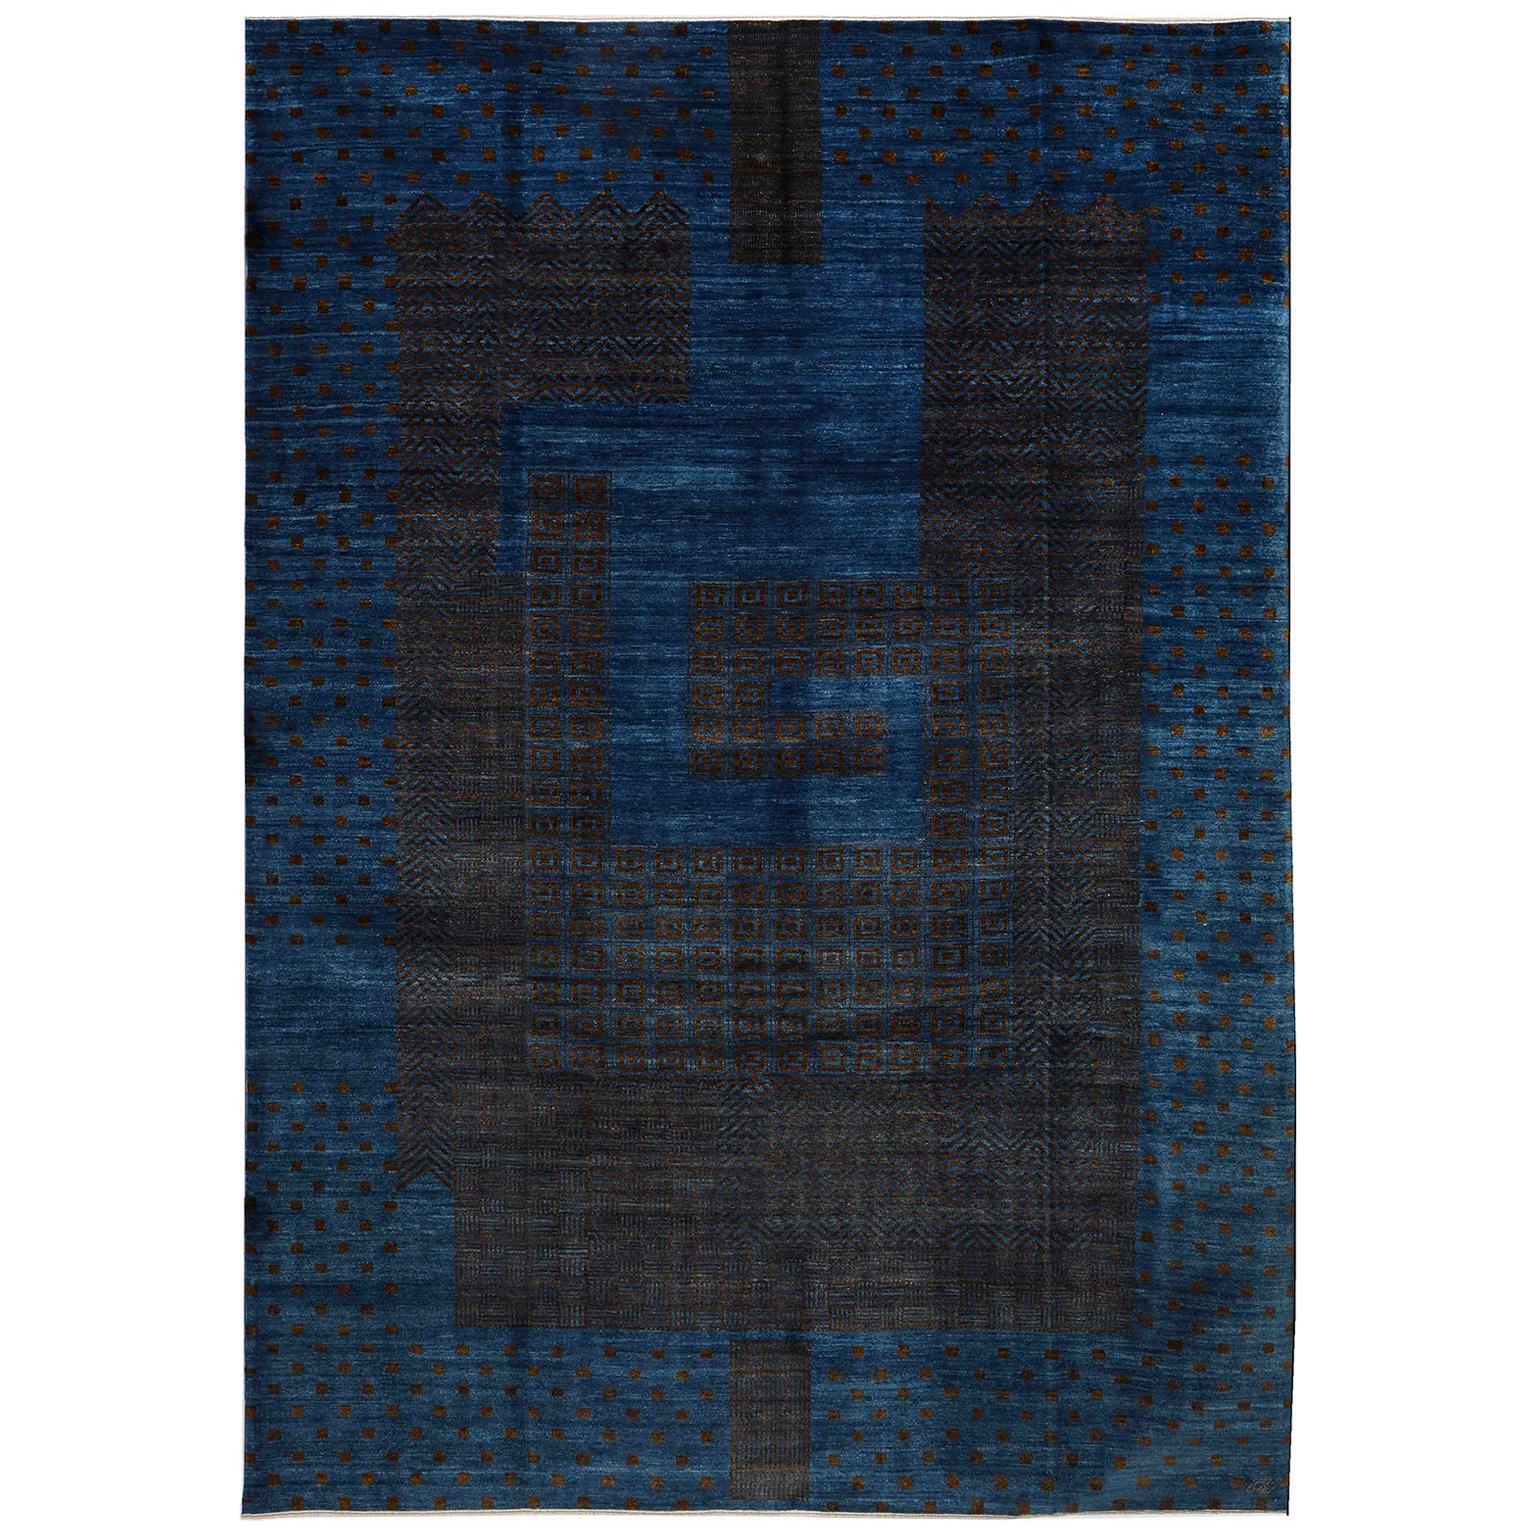 Orley Shabahang Contemporary Wool Persian Rug, Blau und Brown, 9' x 12'